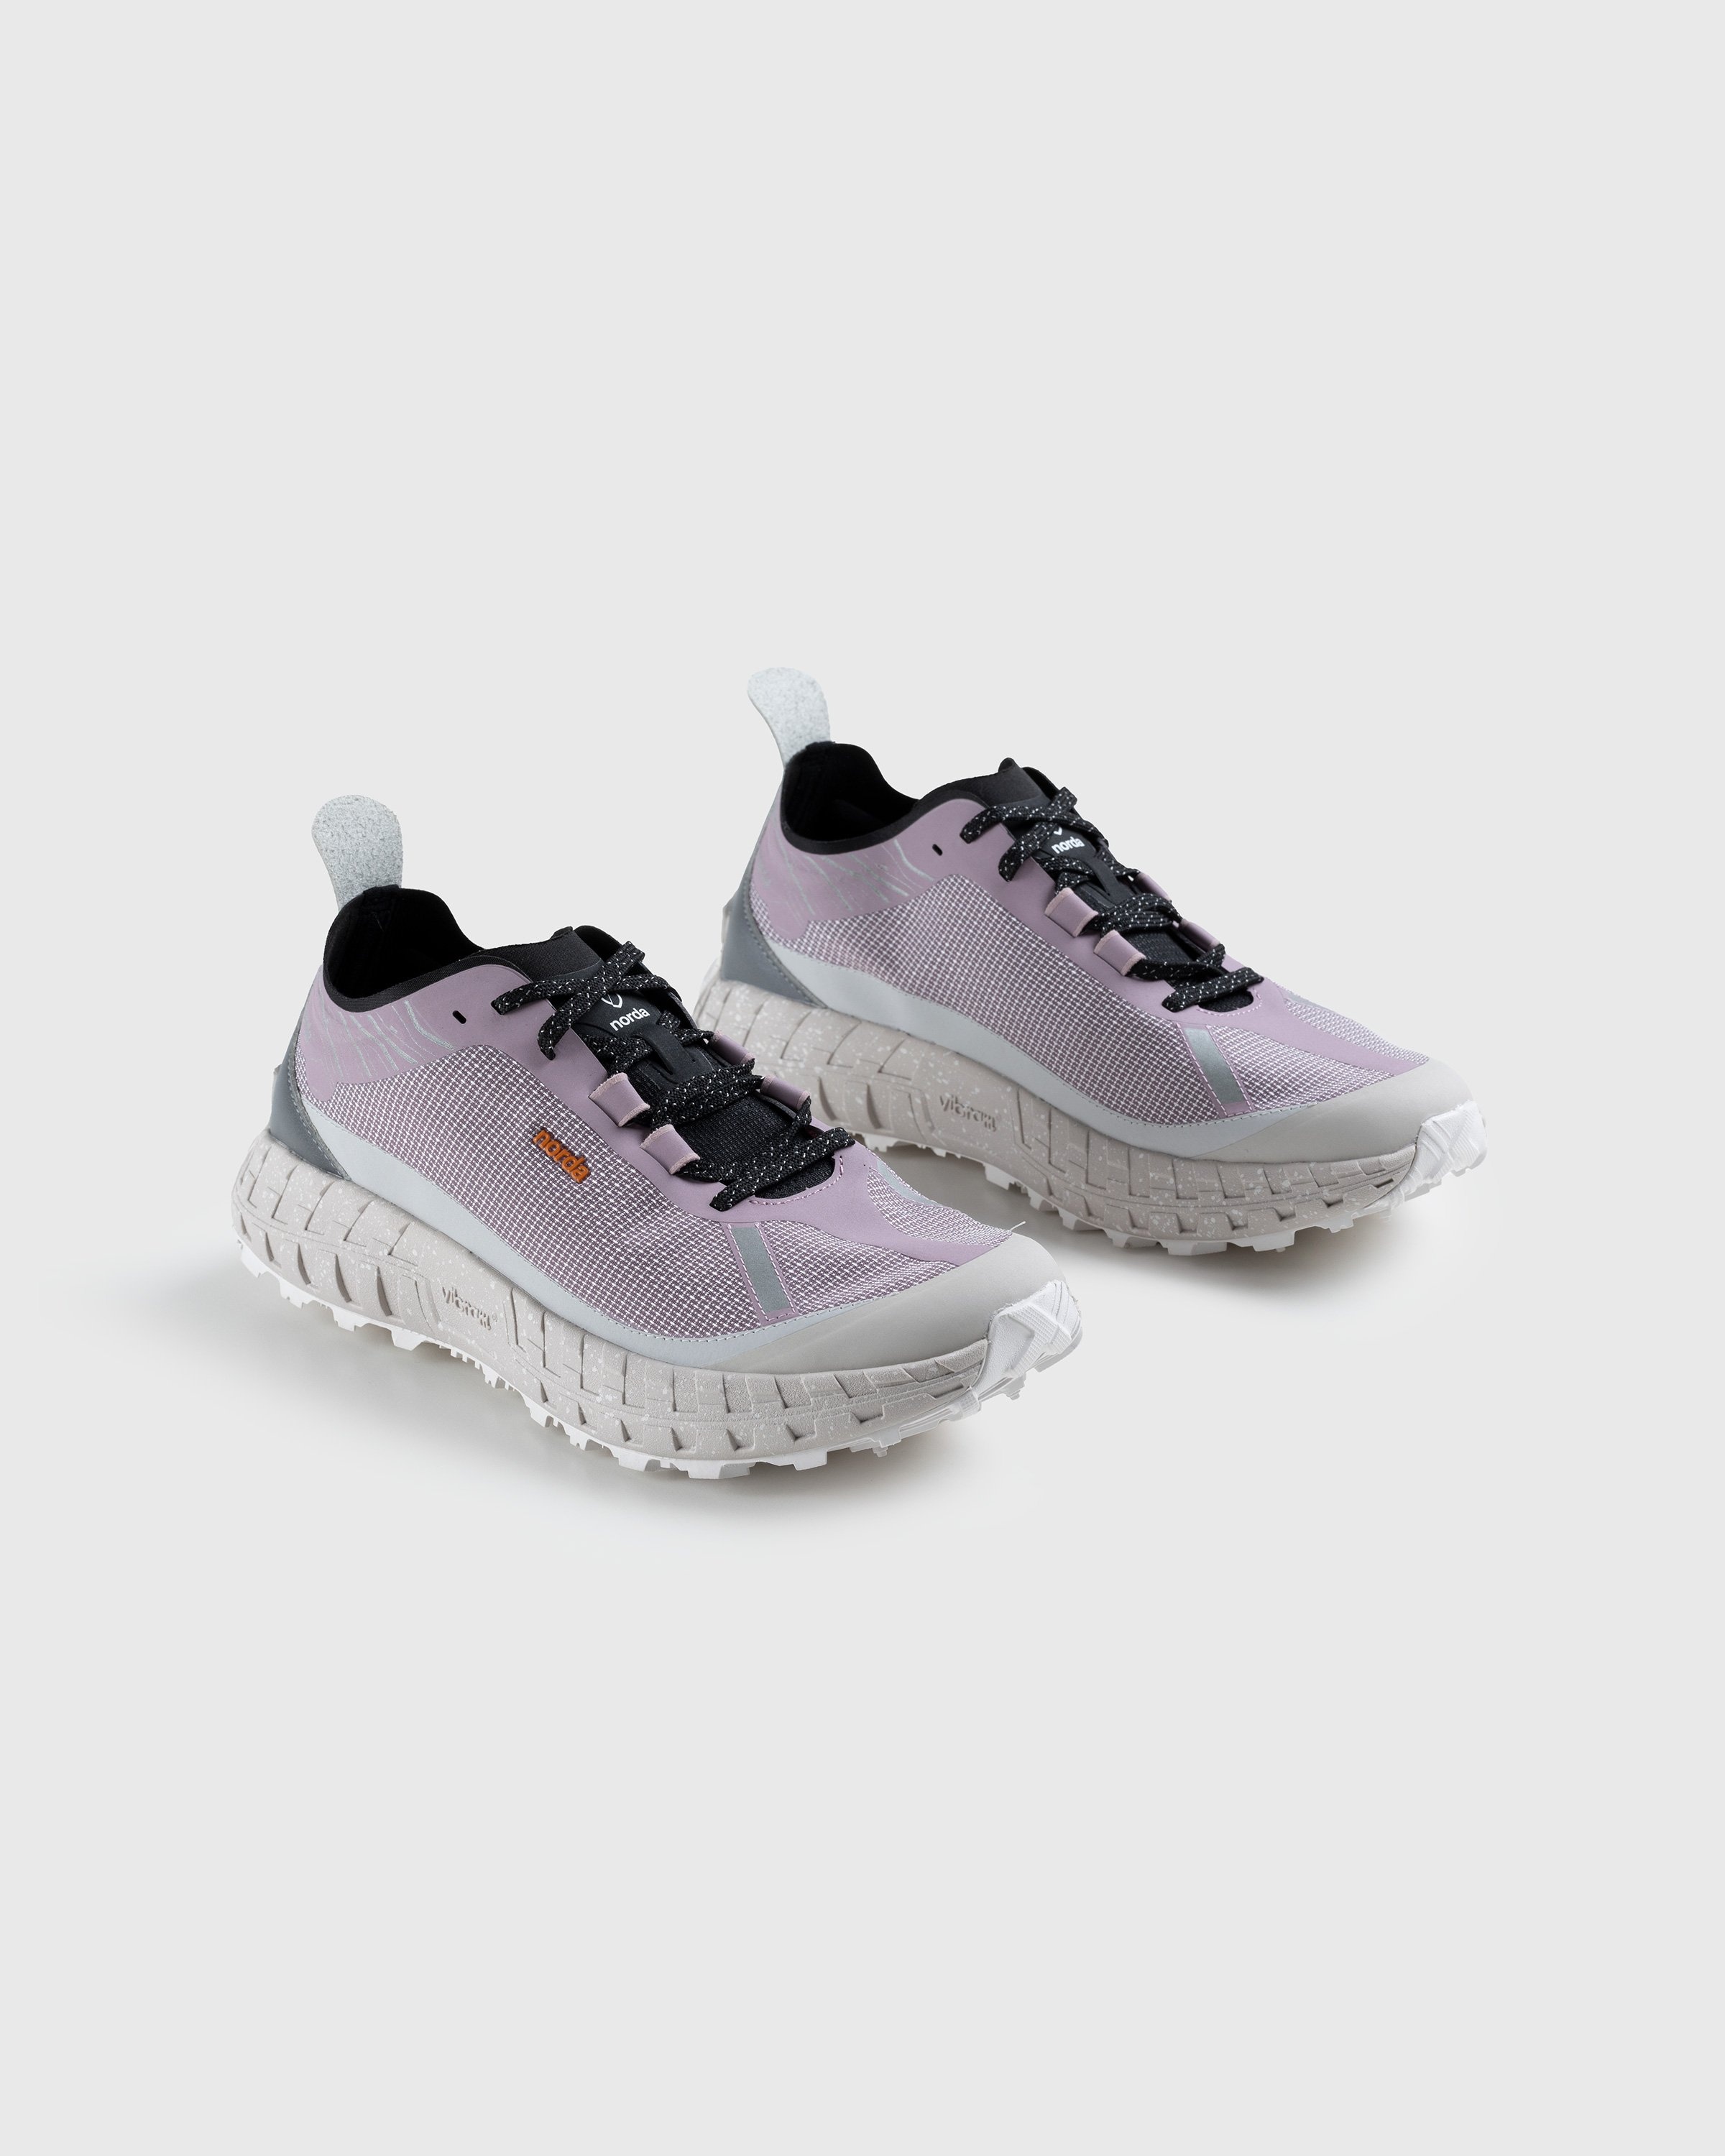 Norda – 001 M LTD Edition Lilac - Sneakers - Purple - Image 3